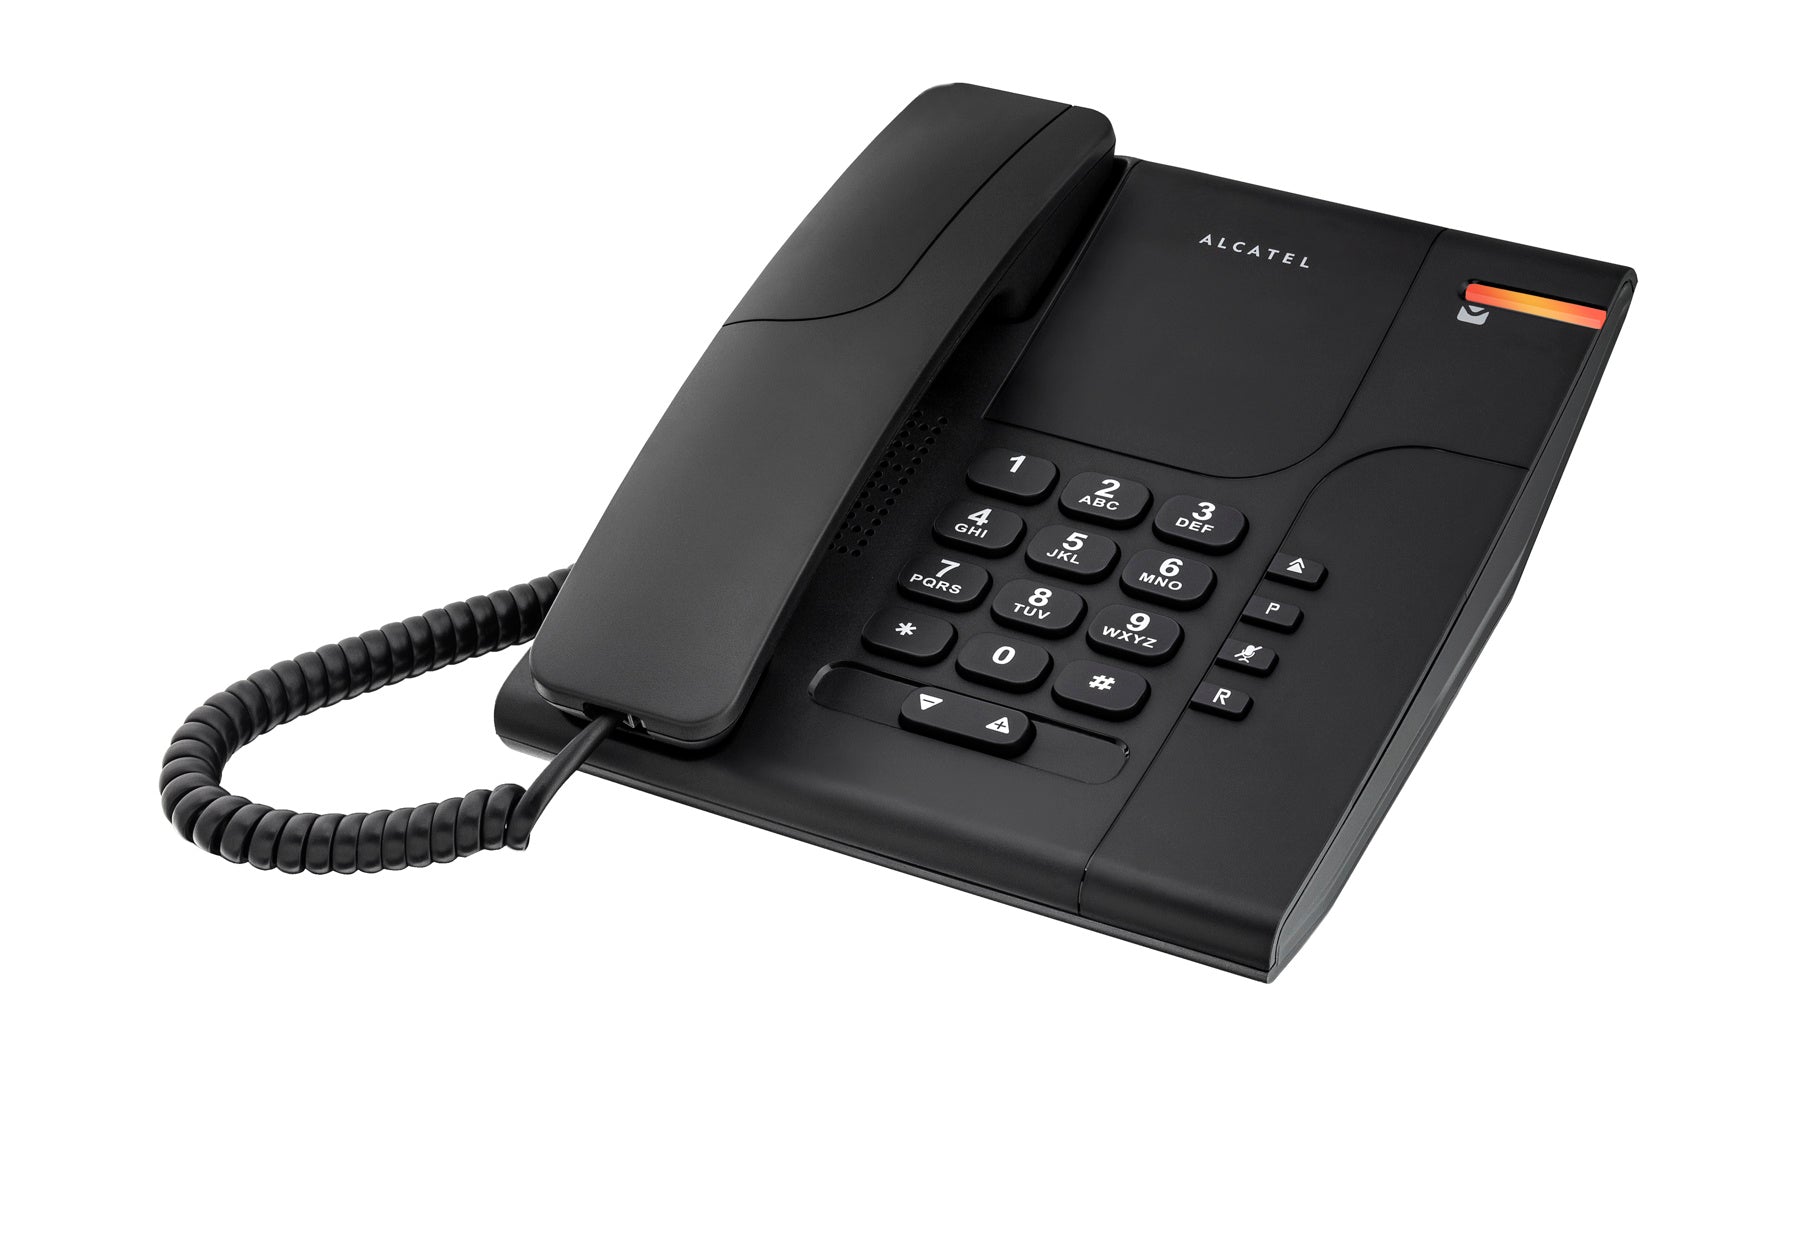 Alcatel Temporis 180 Analogue Phone in Black